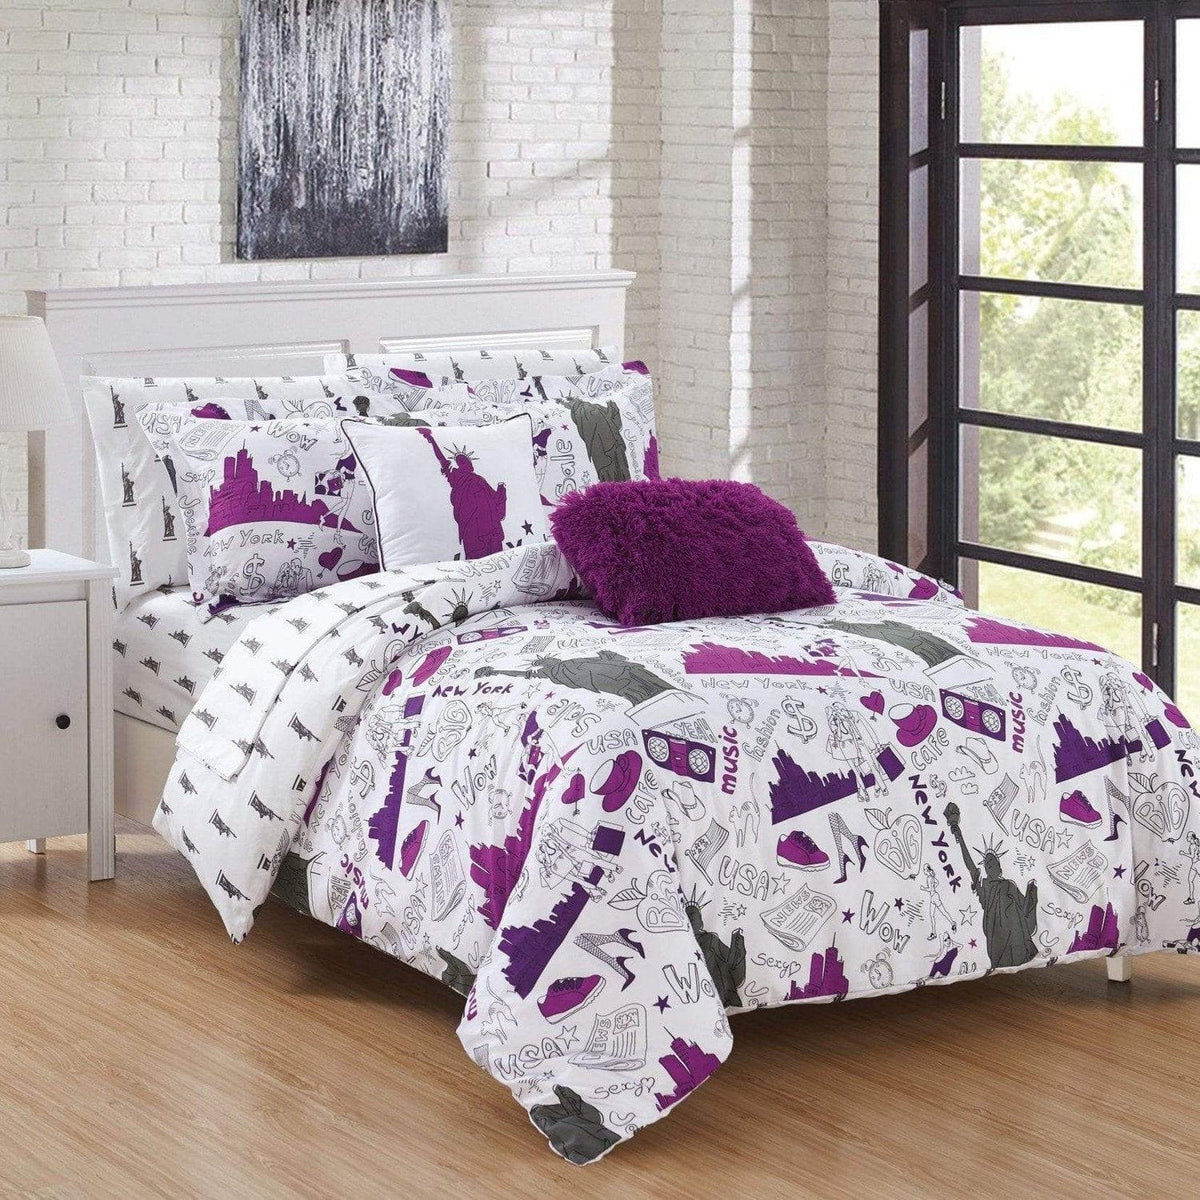 Chic Home Liberty 9 Piece New York Theme Reversible Comforter Set Bedding